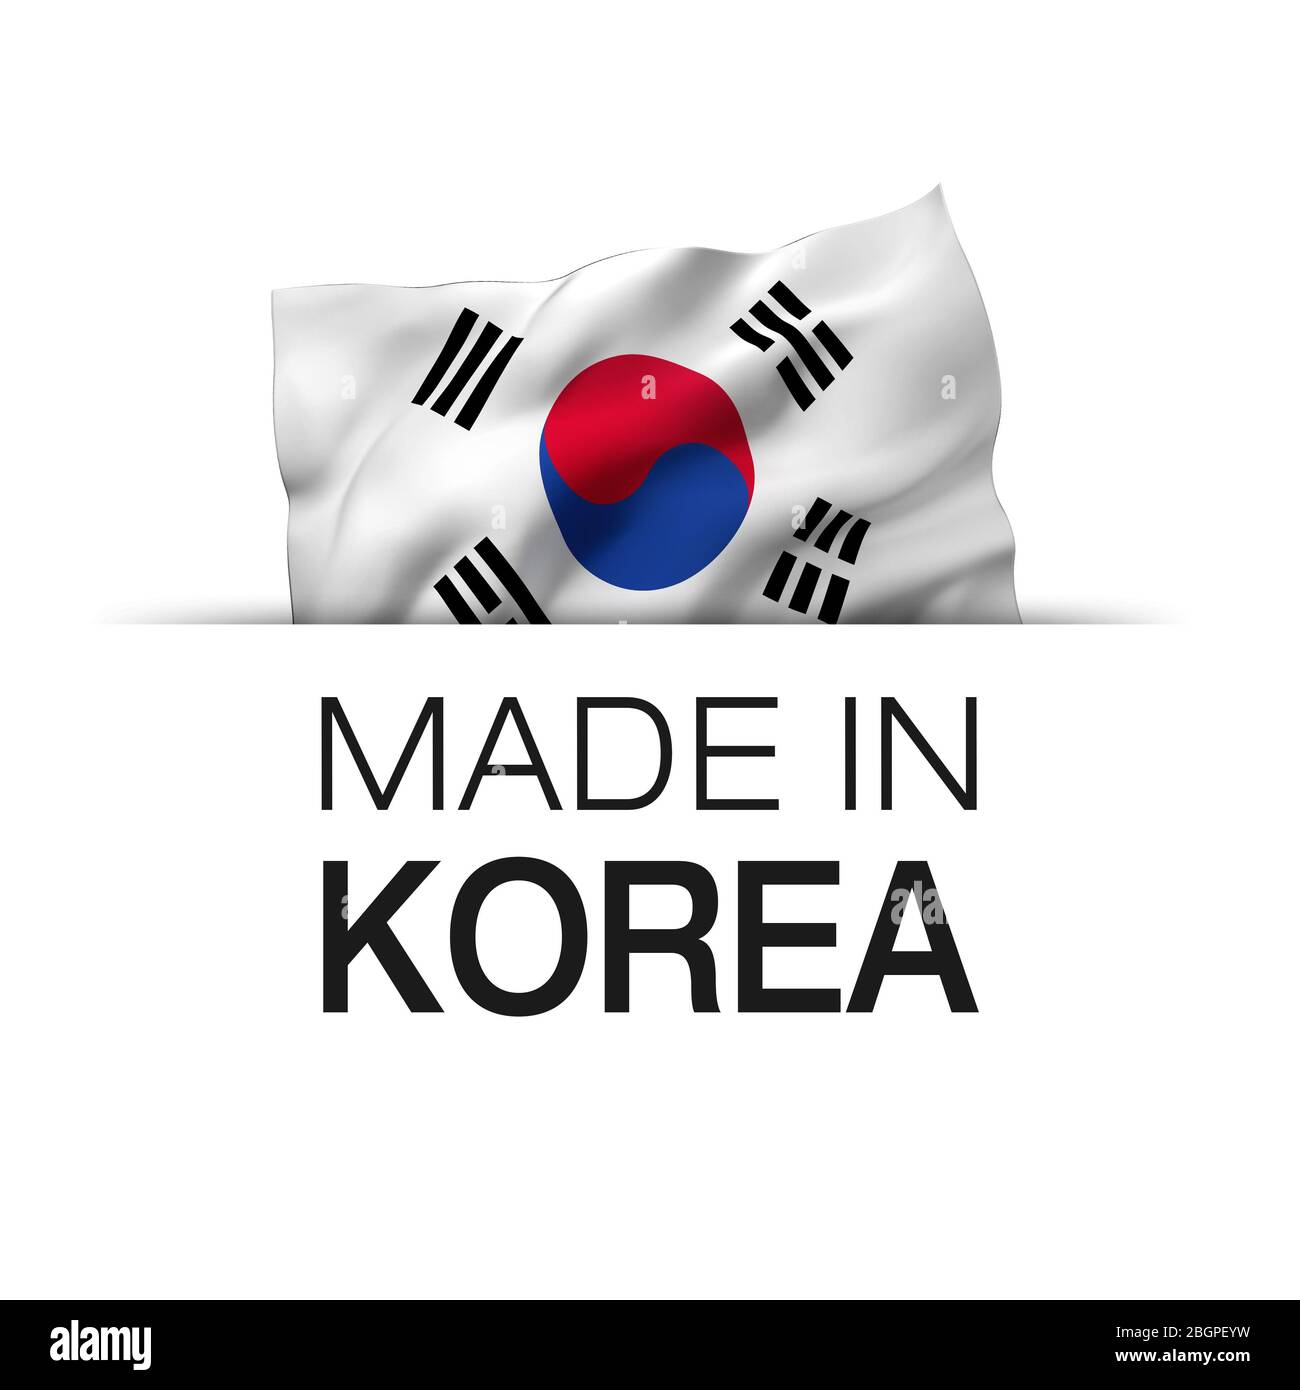 Made in Korea - Guarantee label with a waving South Korean flag. Stock Photo